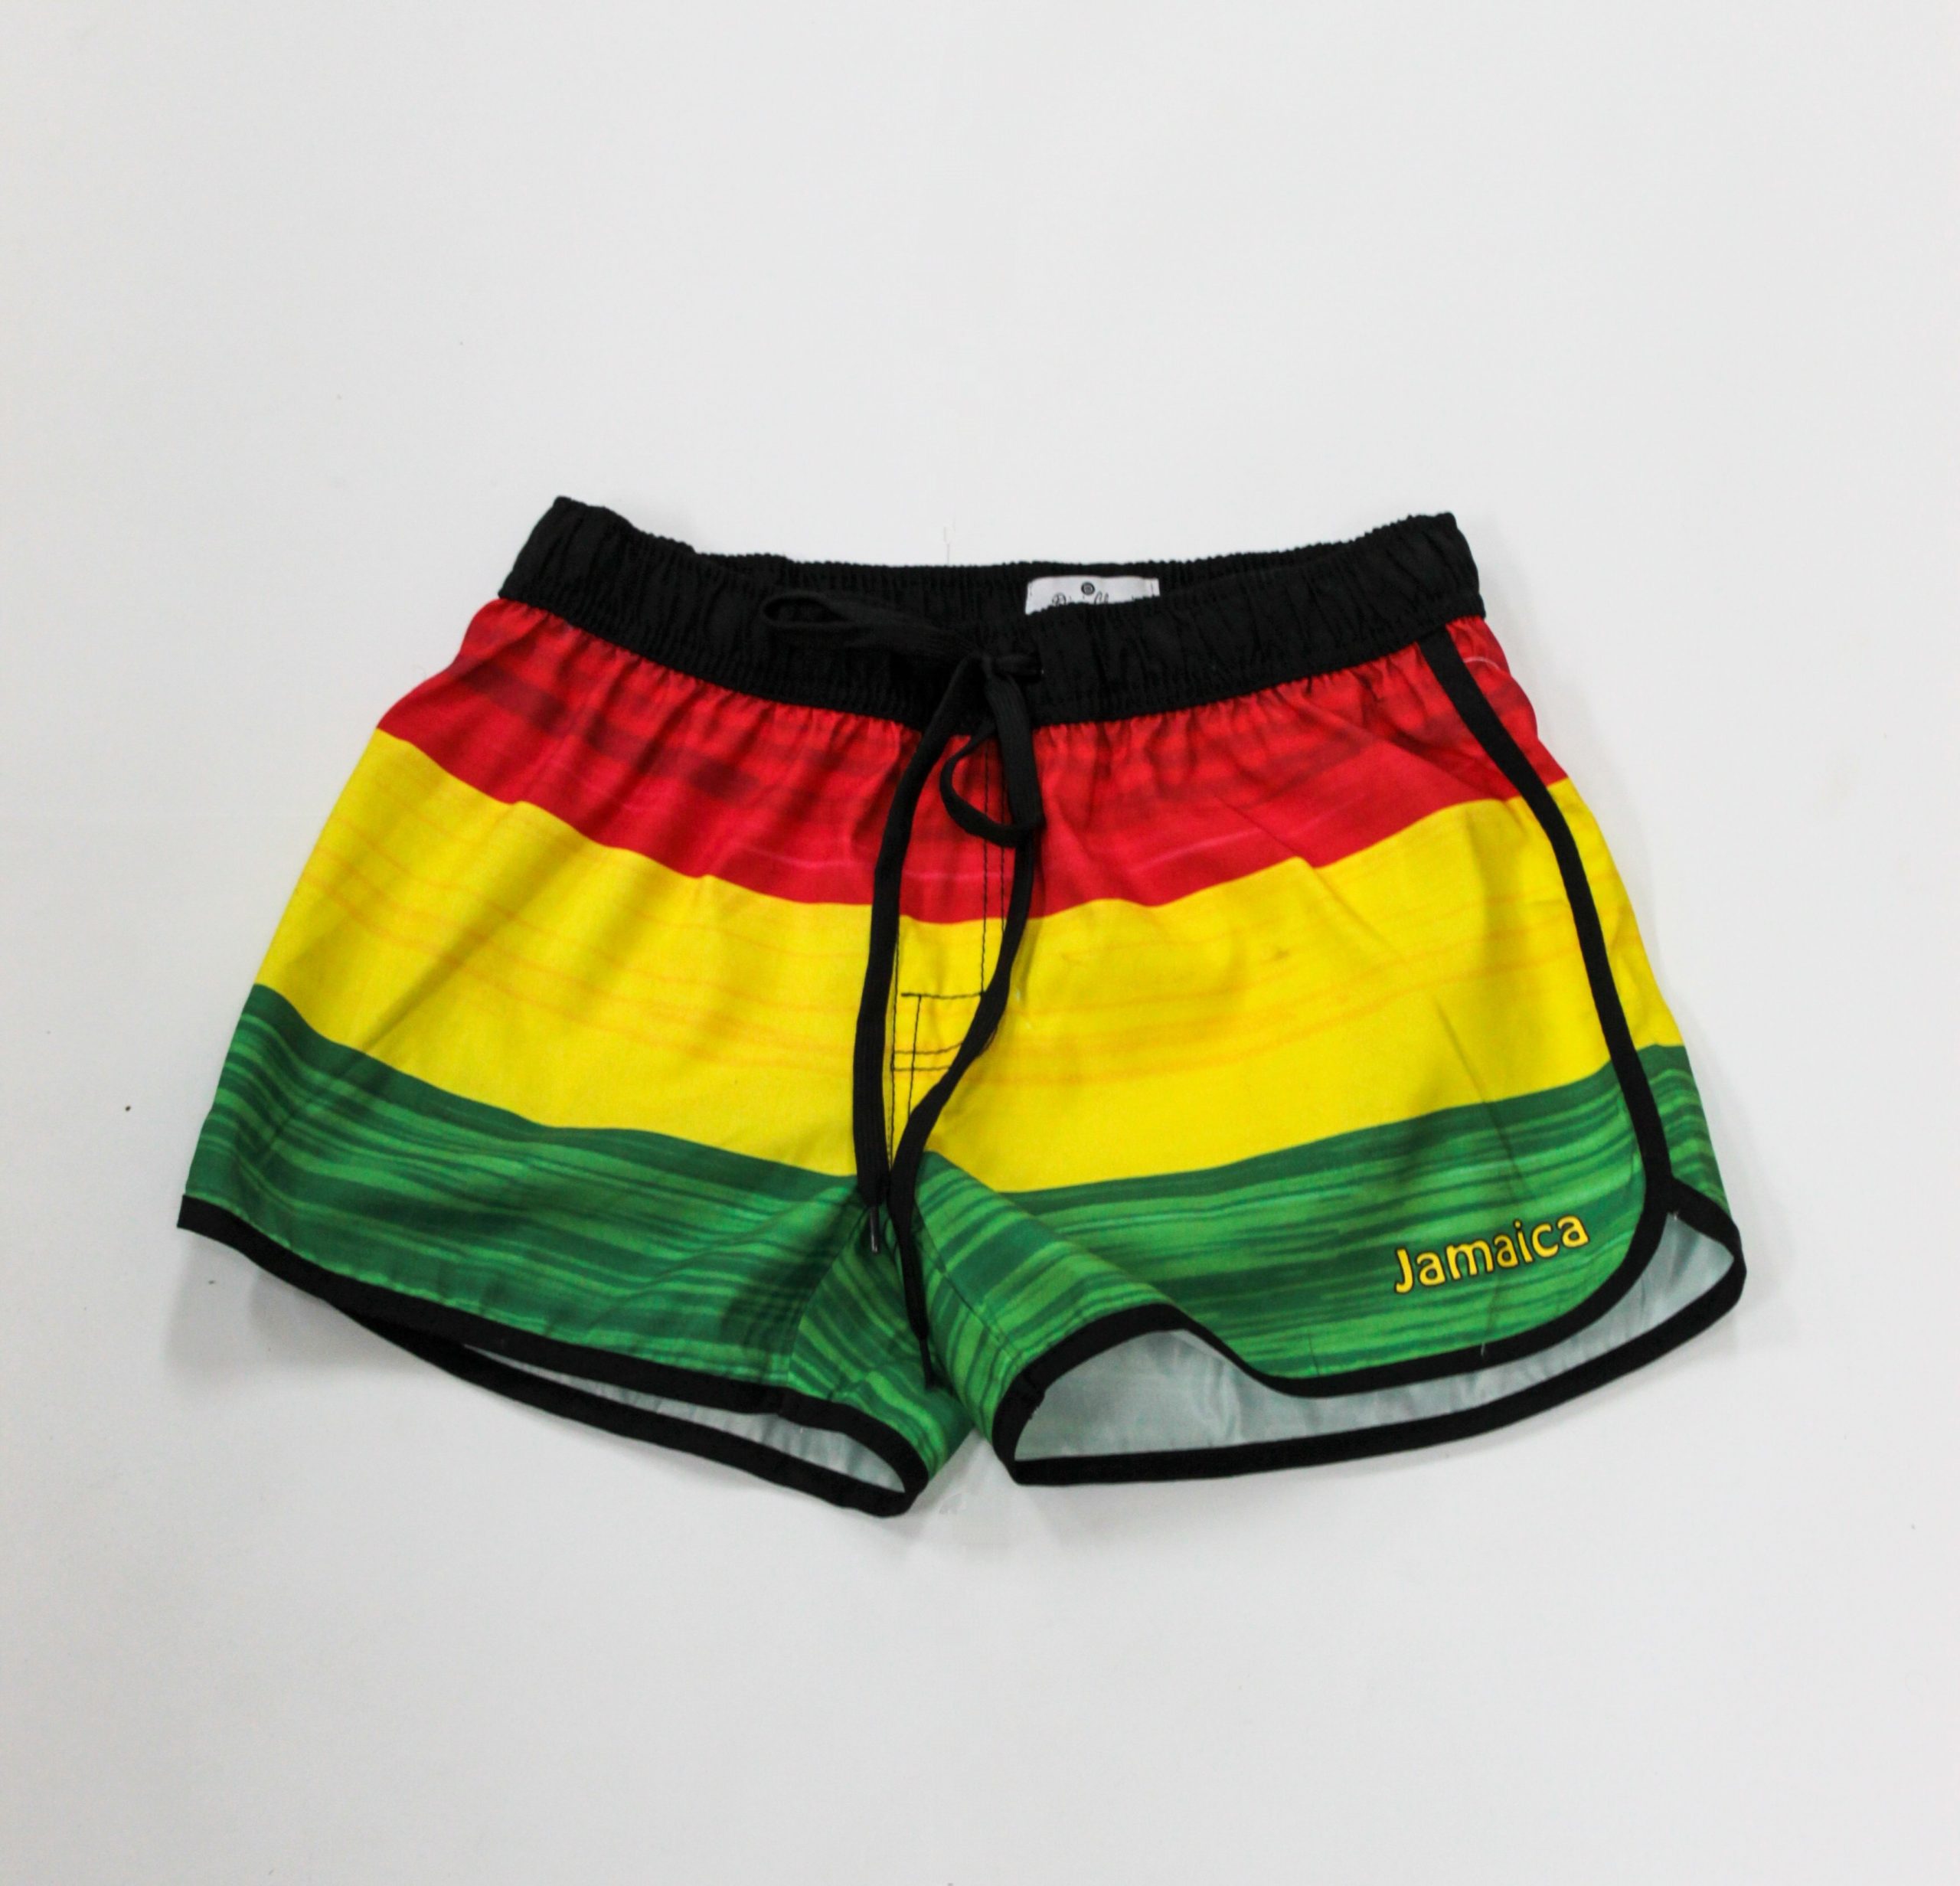 Rhinestone Bra Jamaican Theme One Love Matching Shorts and Bangle